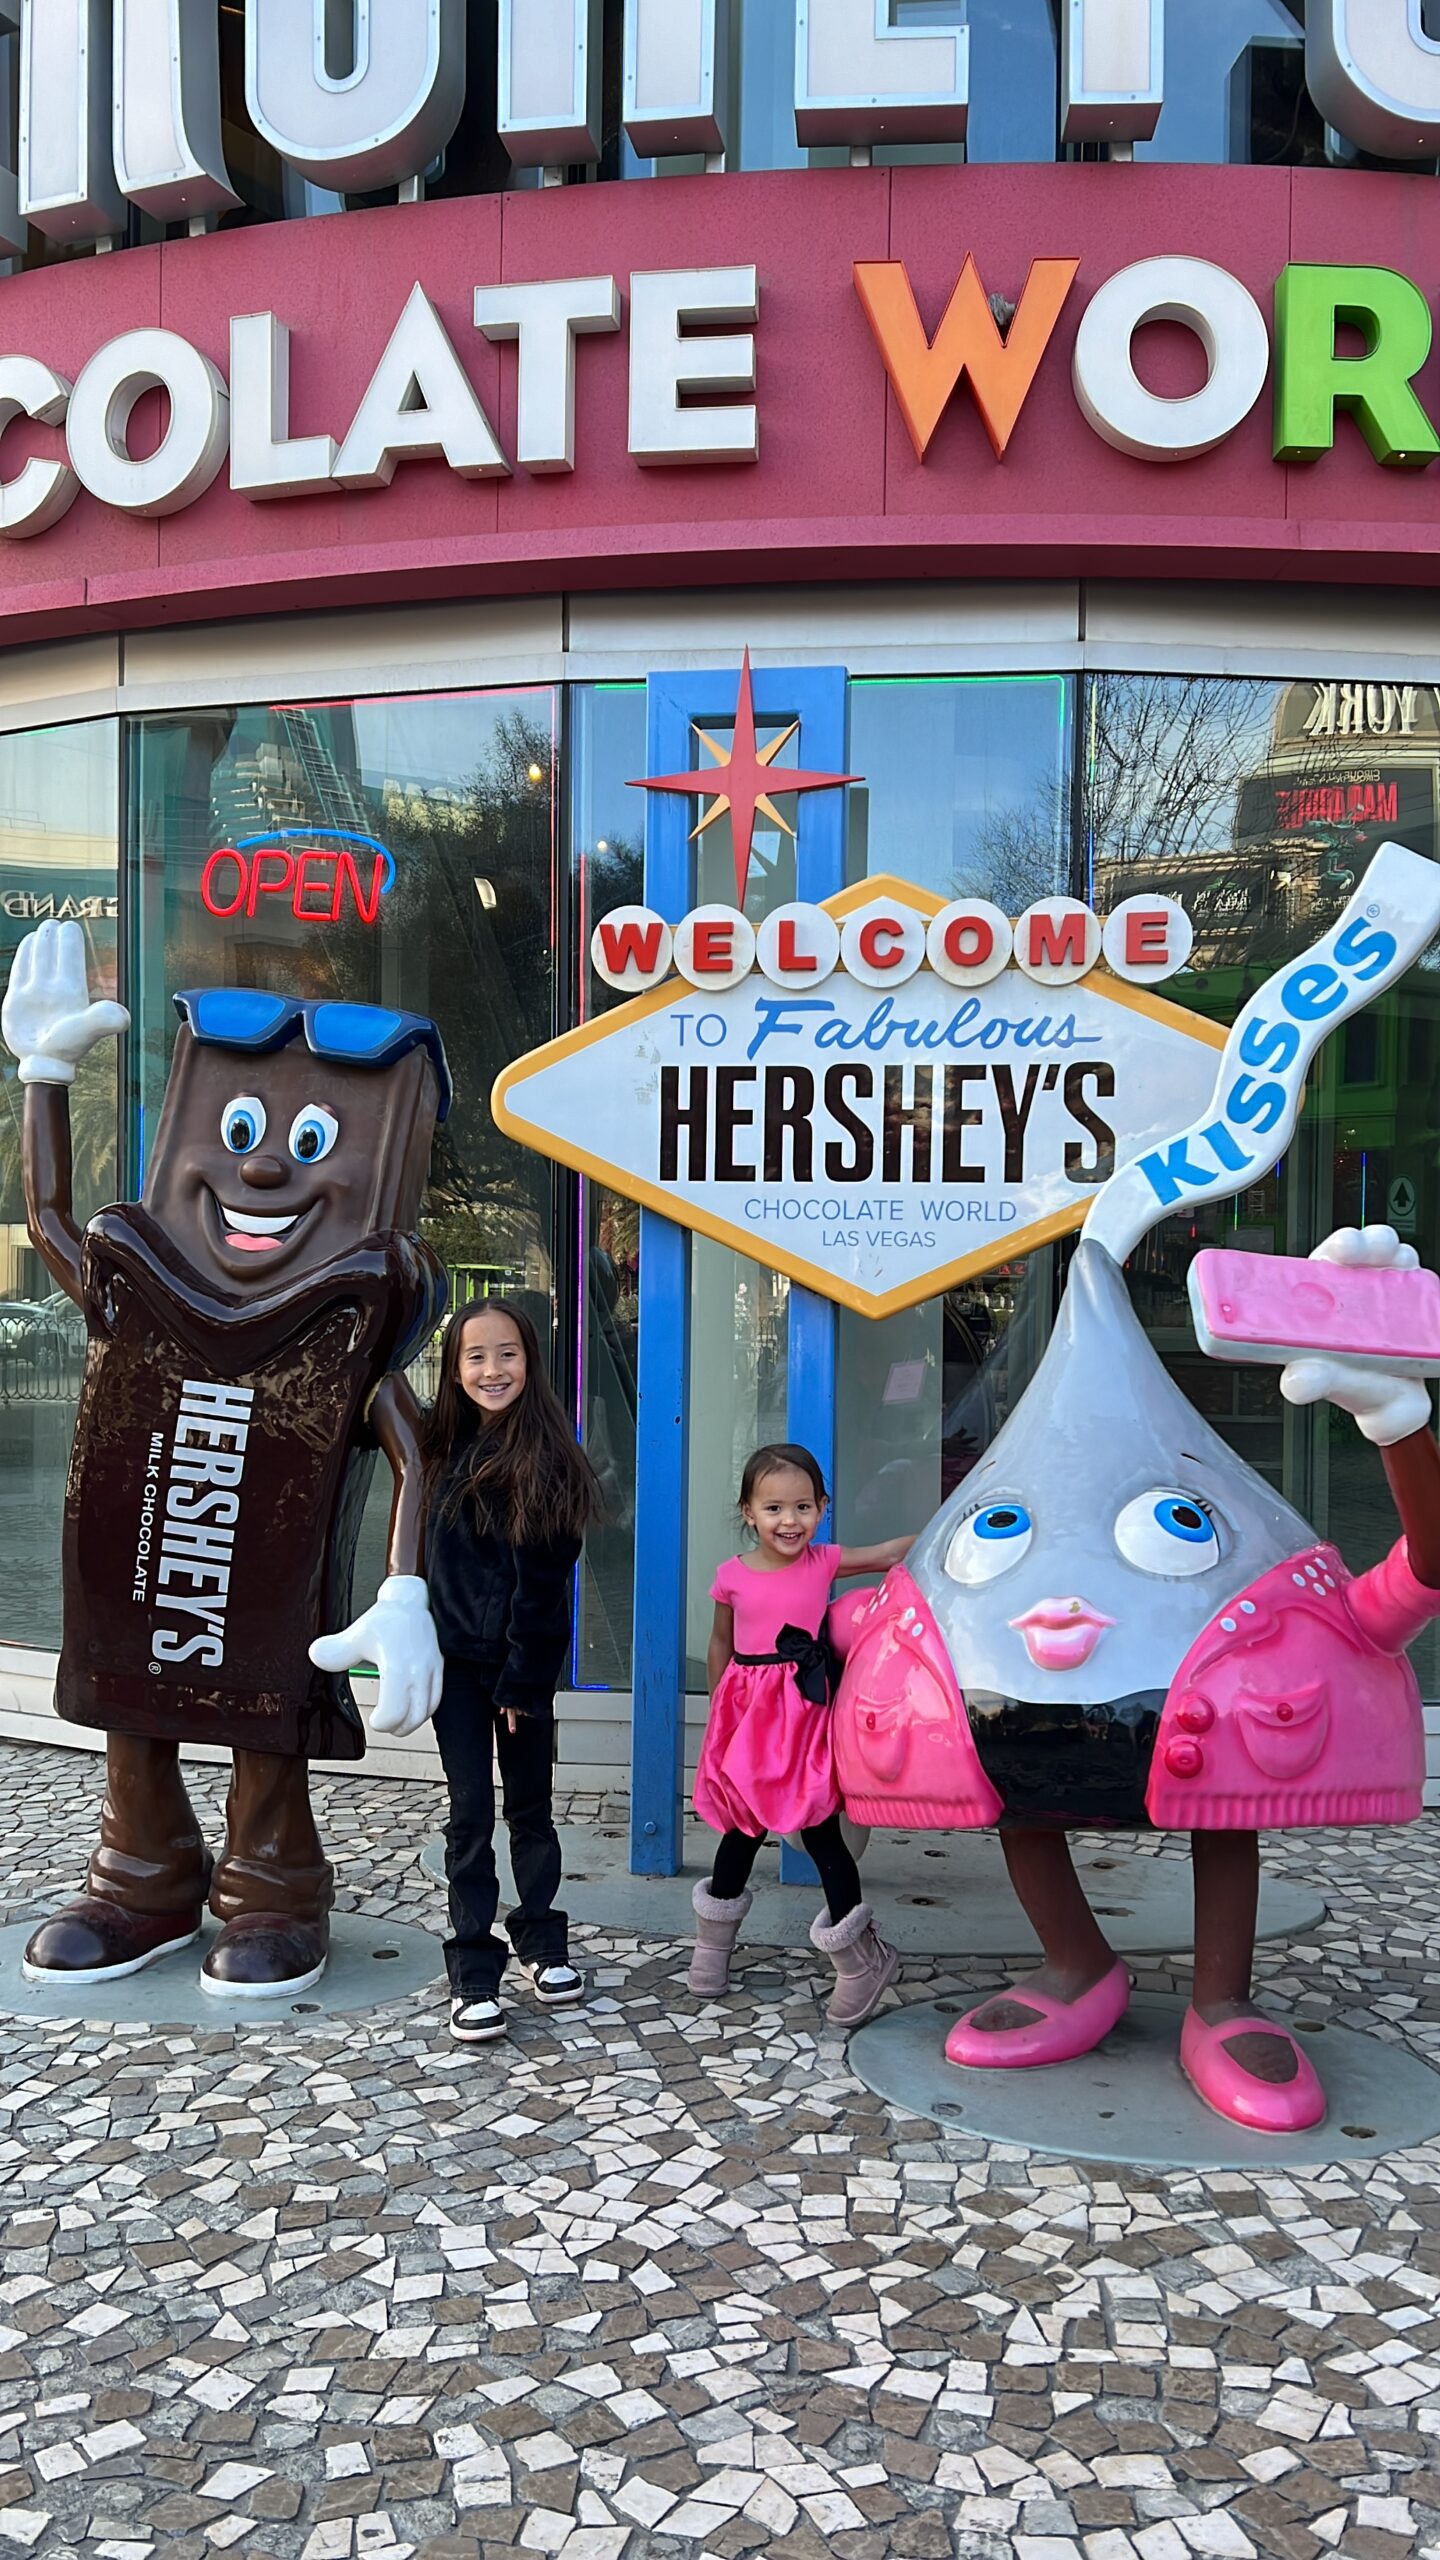 las vegas hershey's chocolate world 